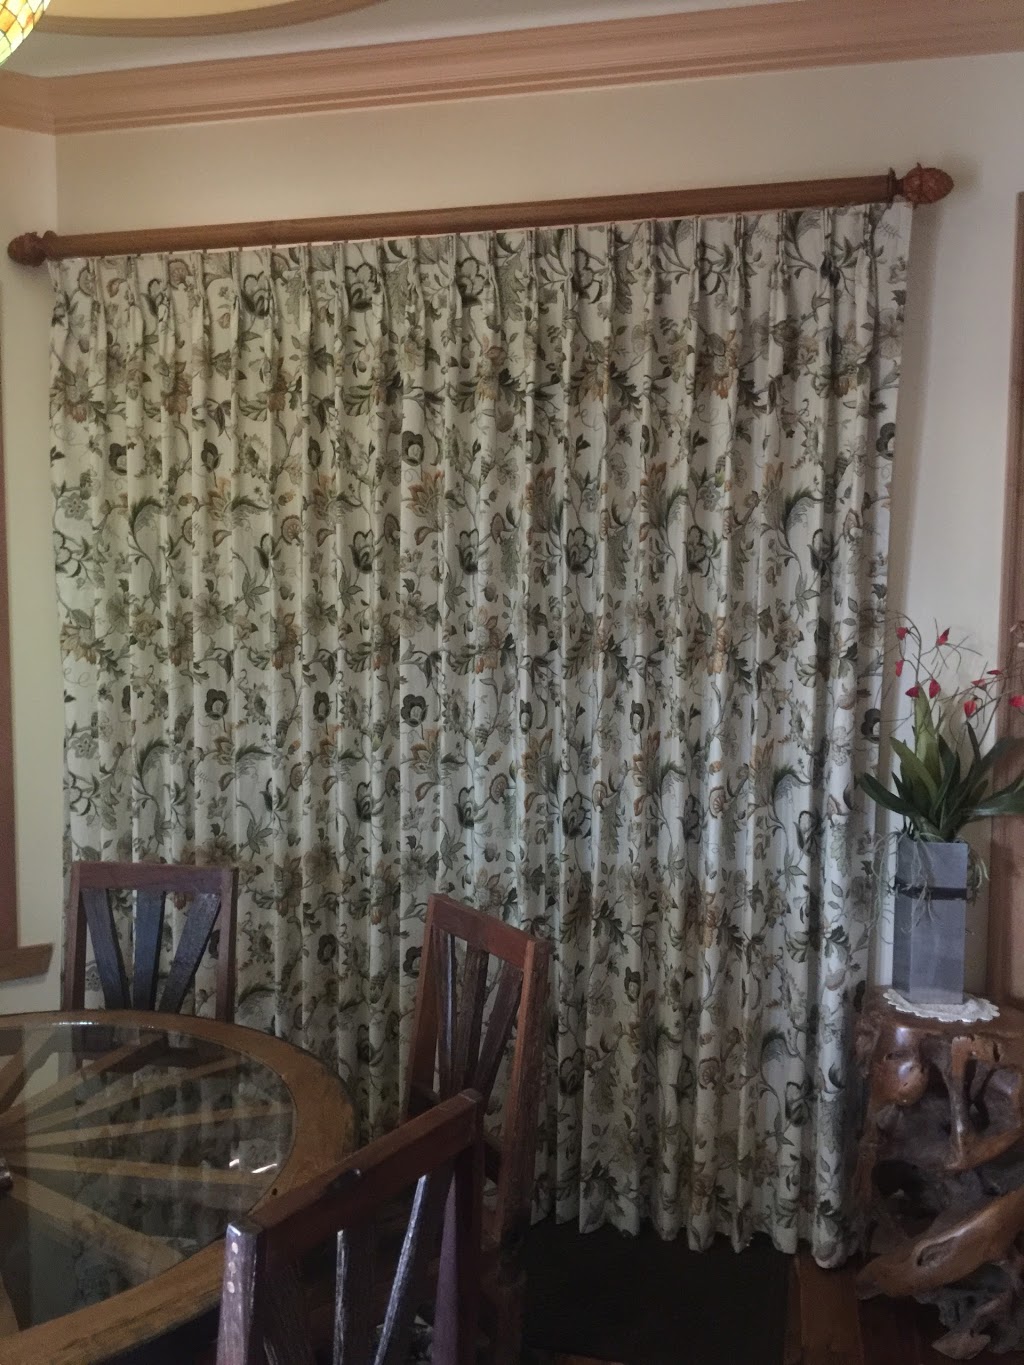 LM Curtains | home goods store | 36 Conrad Pl, Lavington NSW 2641, Australia | 0260258126 OR +61 2 6025 8126